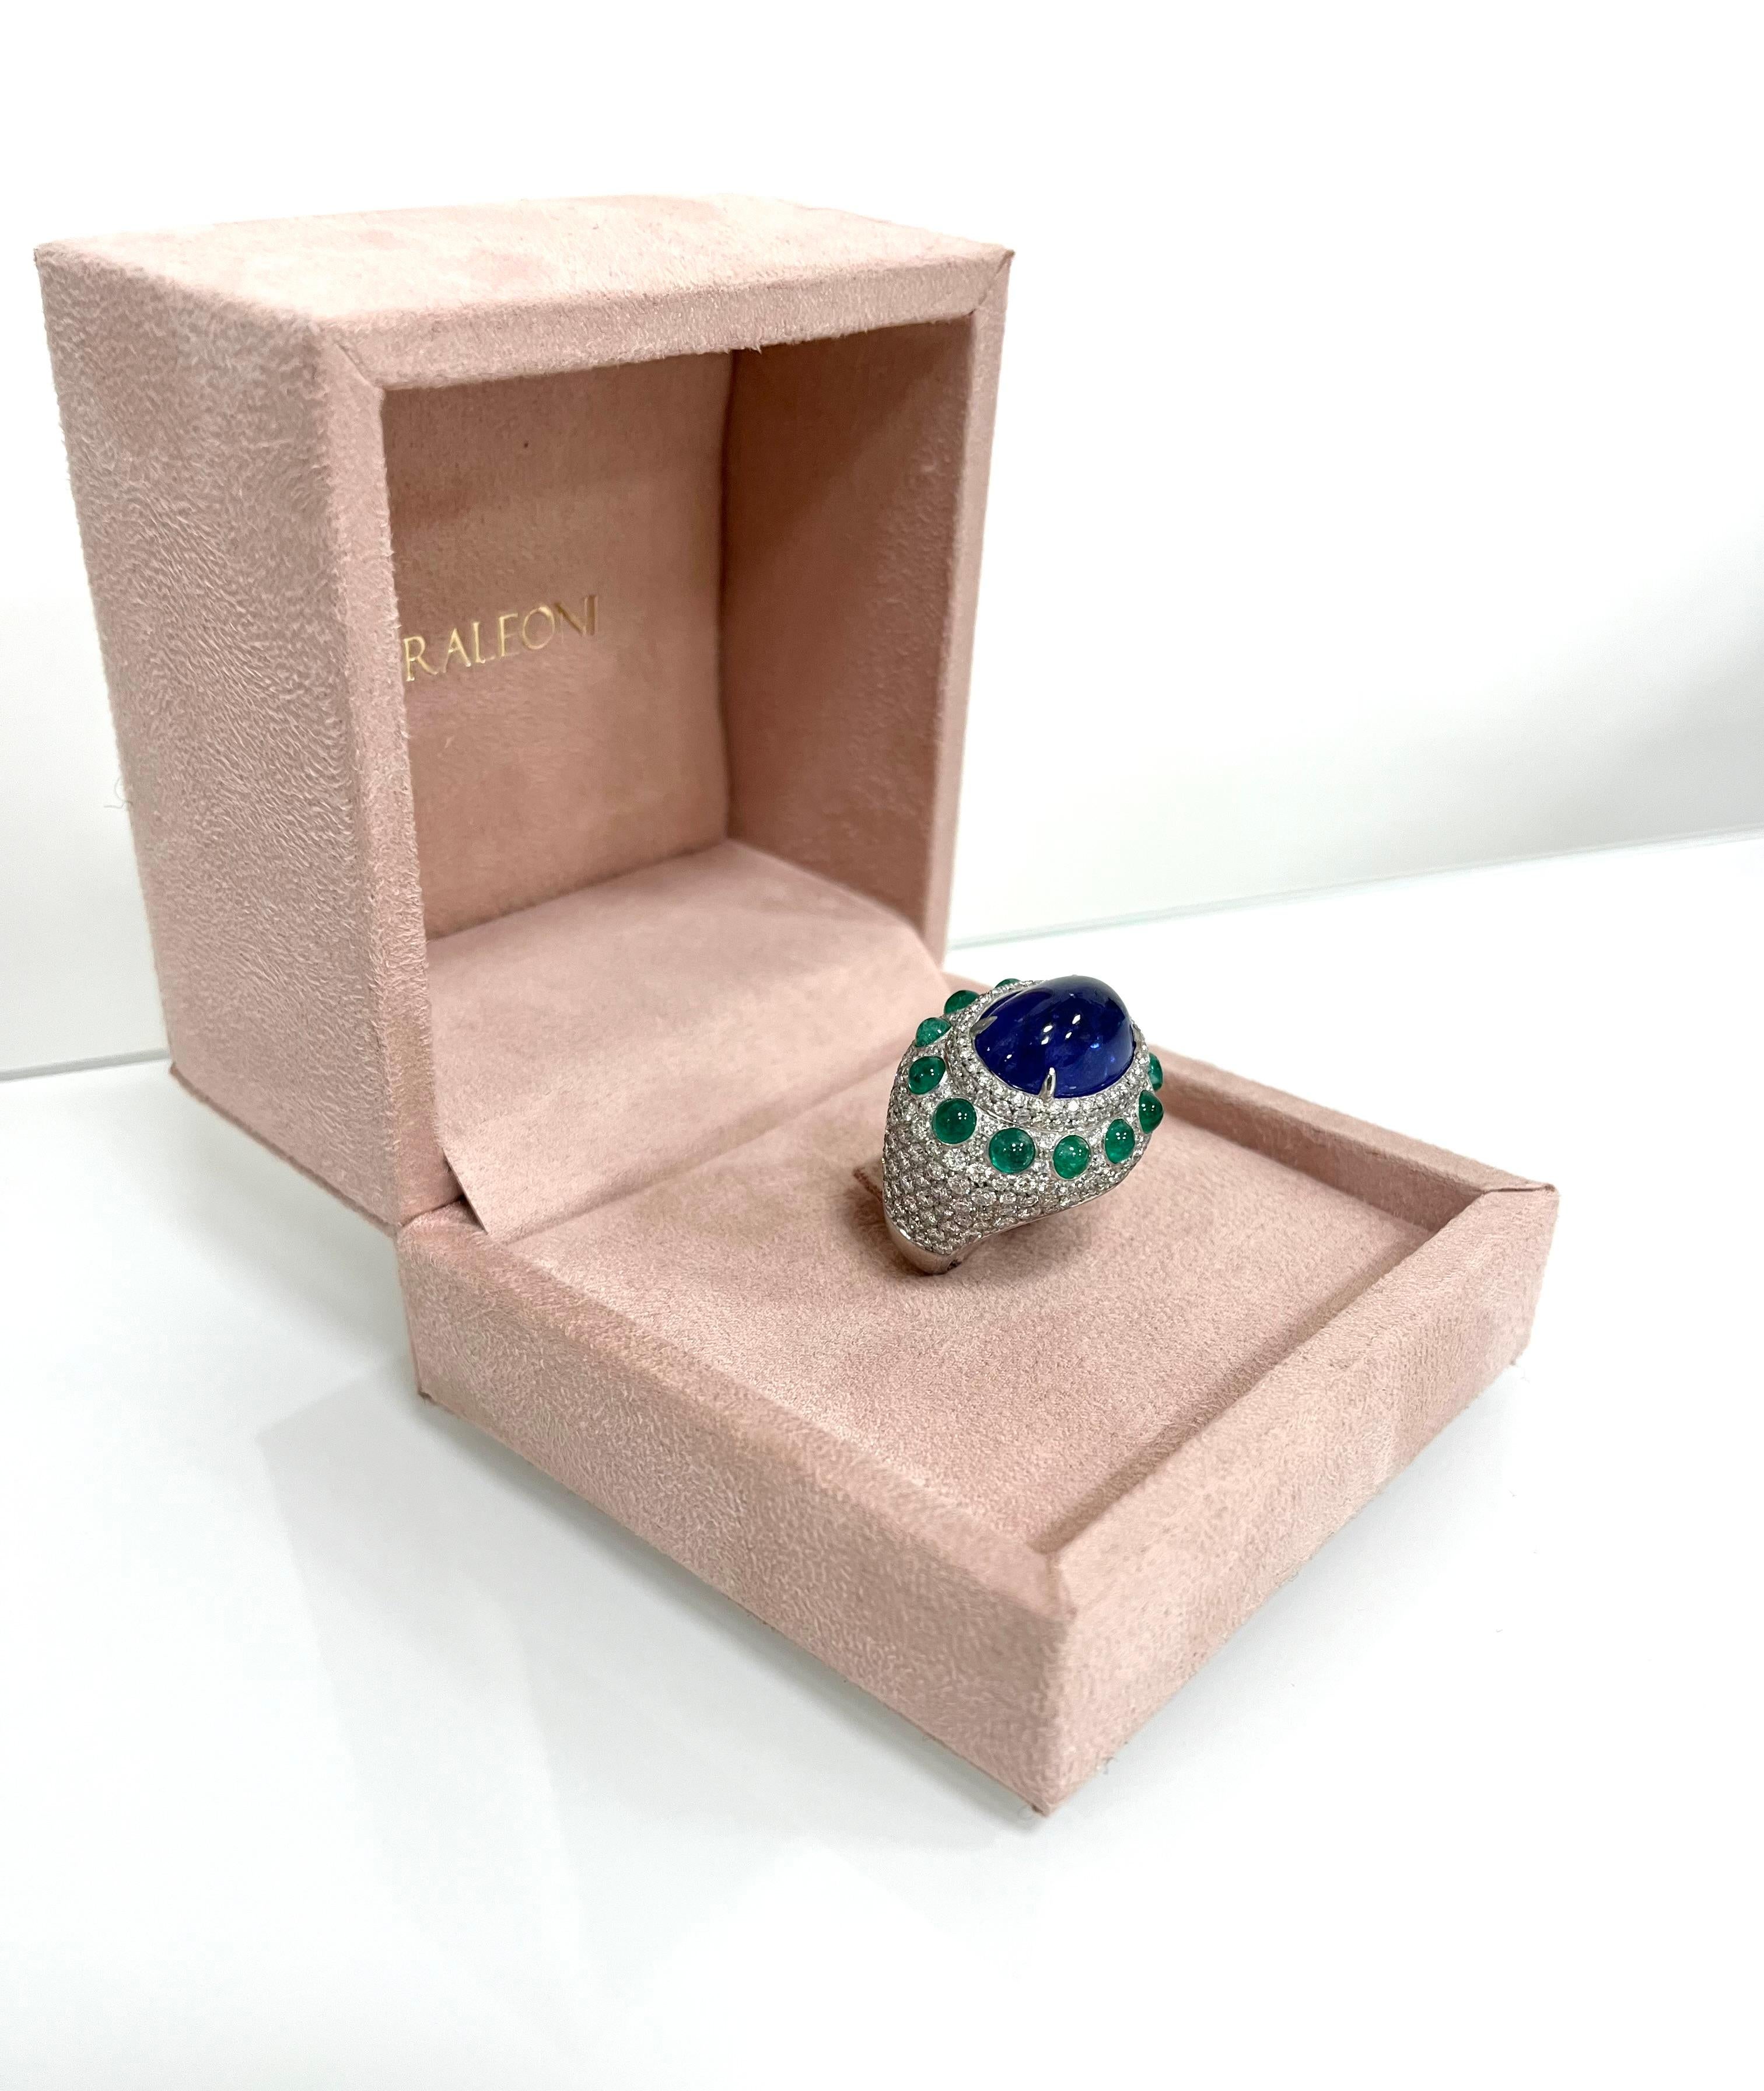 Fraleoni 18 Kt. White Gold Diamonds Emerald Tanzanite Cocktail Ring For Sale 3